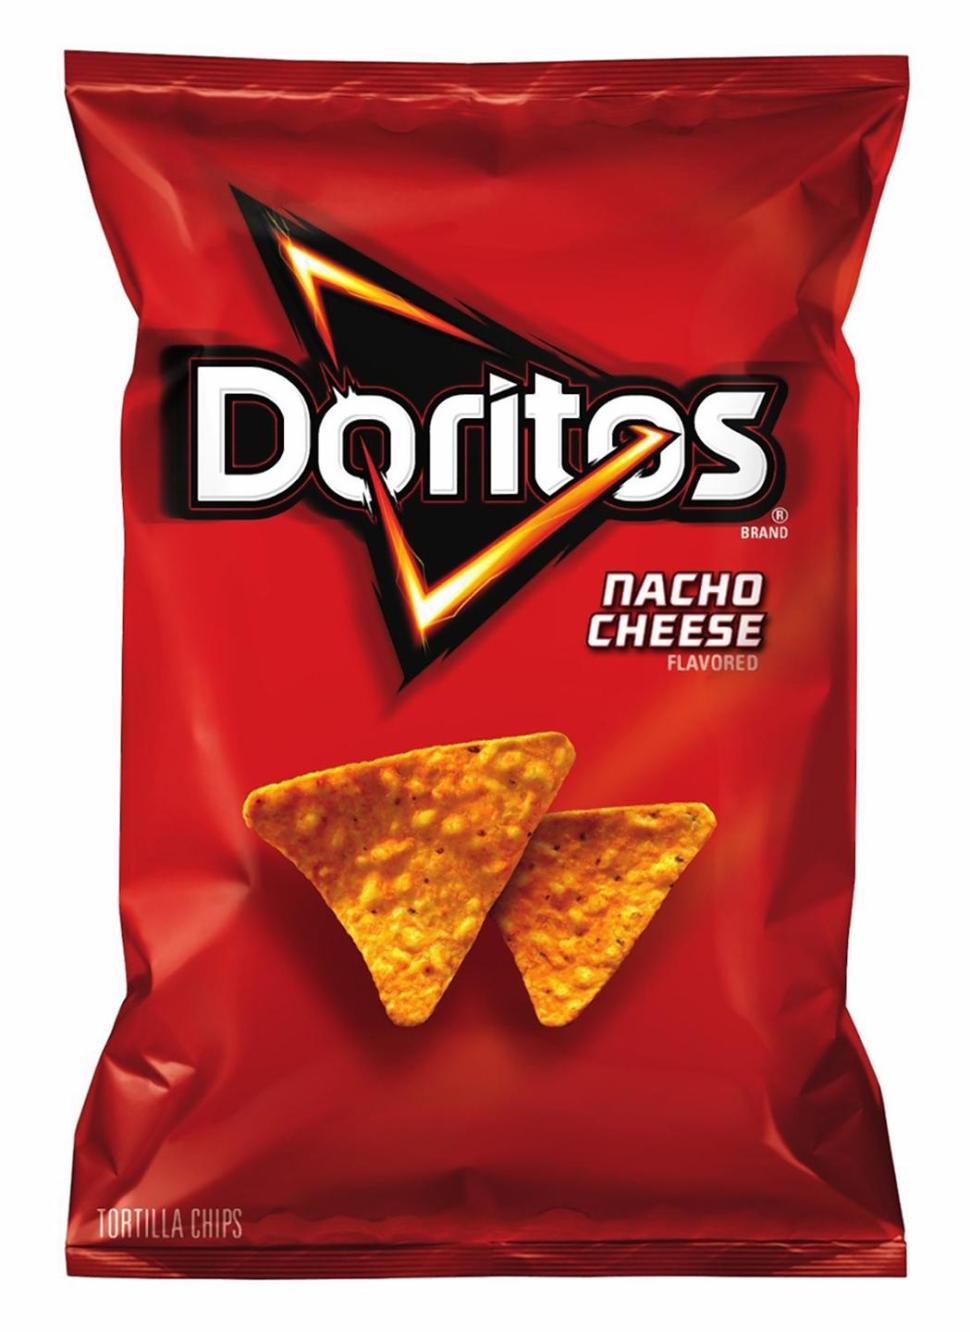 Doritos Chips Bag Of Doritos Chips Bags